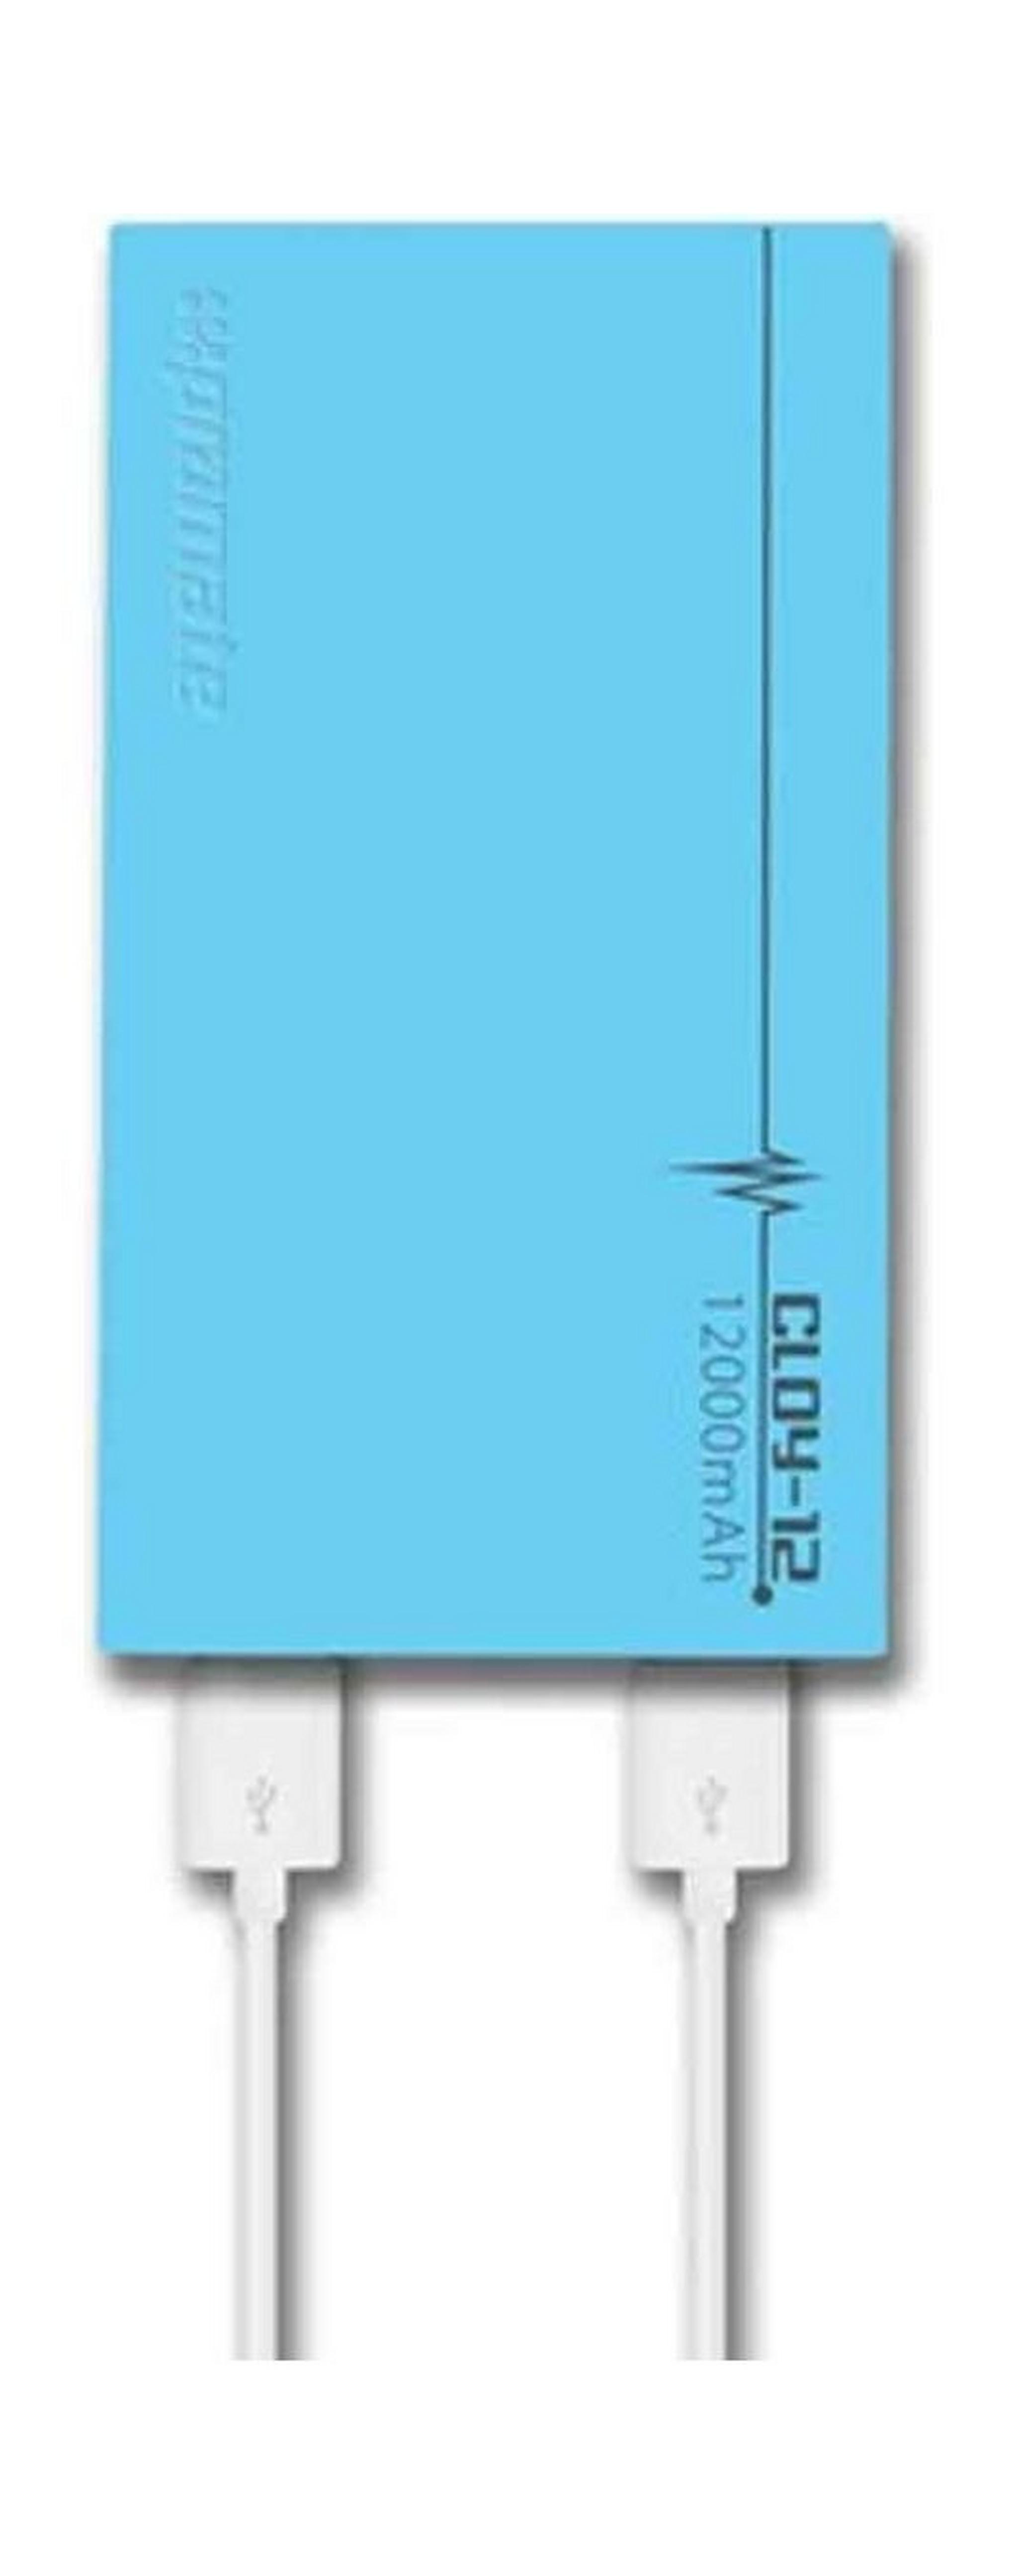 Promate Cloy-12 Premium Dual USB 12000mAh Power Bank - Blue